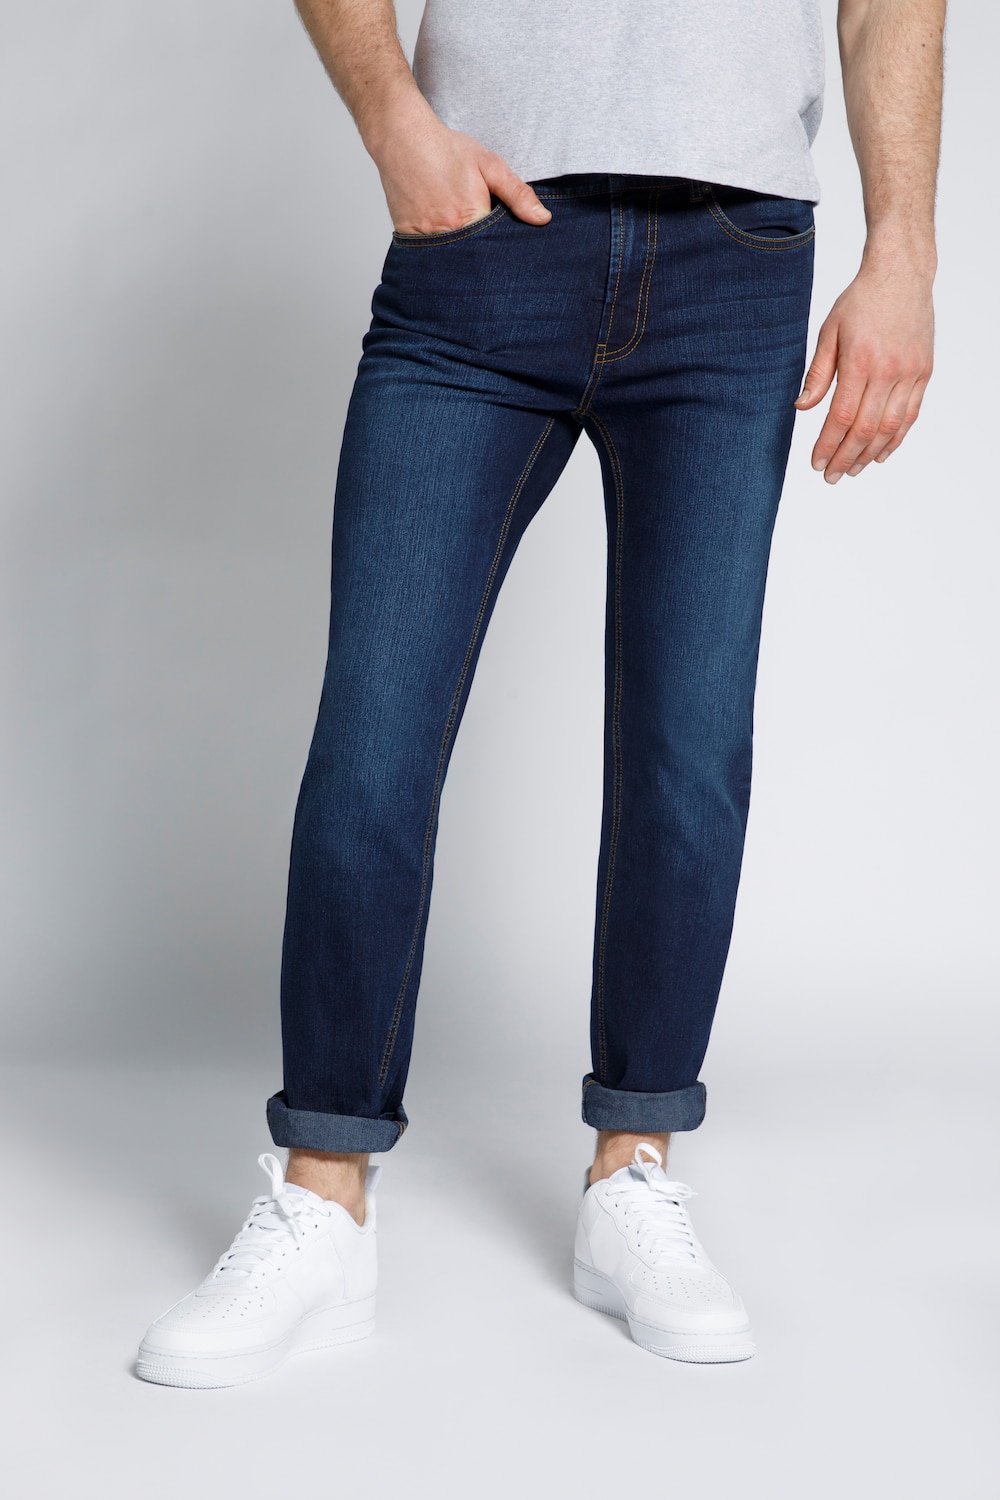 Image of Grosse Grössen Herren Jeans Modern Fit, Herren, blau, Größe: 26, Baumwolle/Polyester, STHUGE